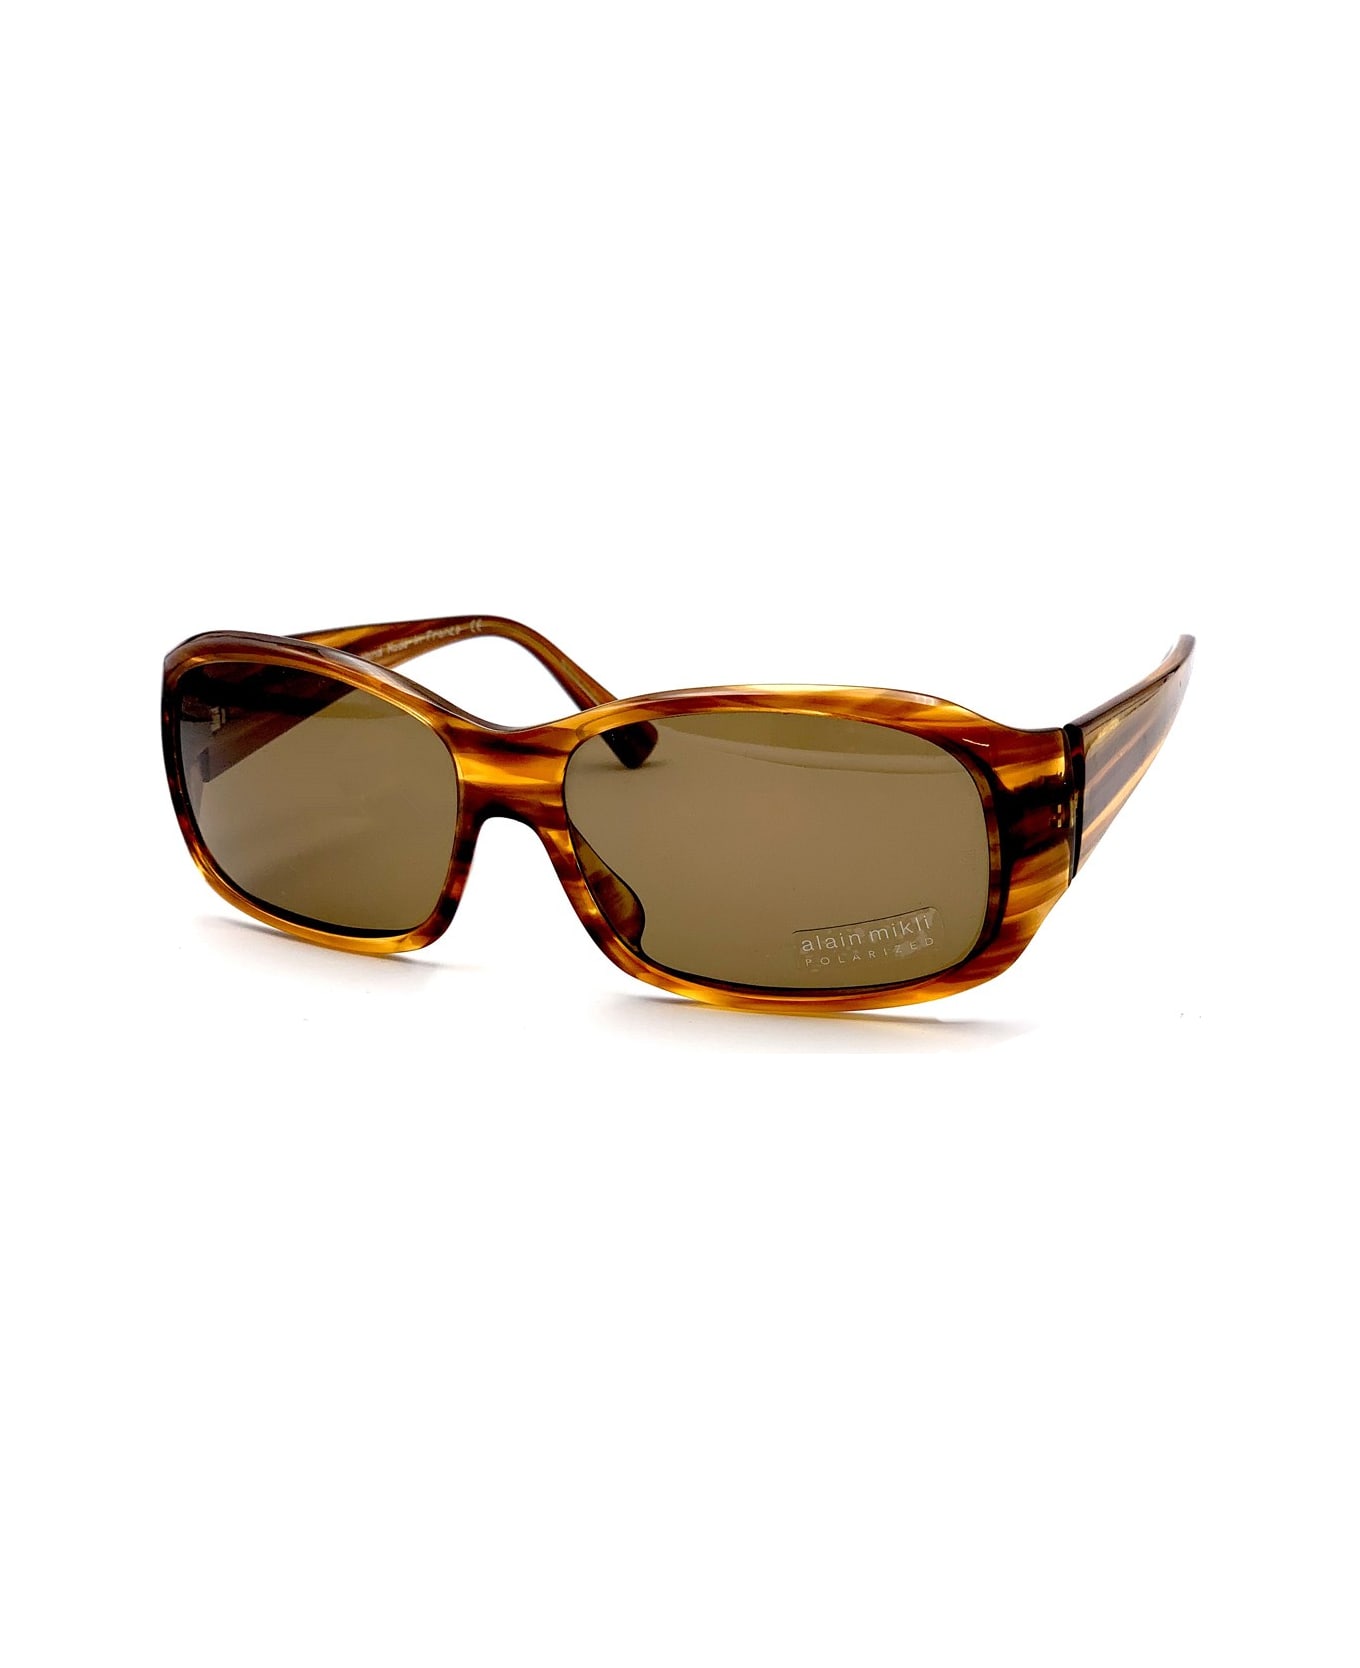 Alain Mikli A0465 Pact Polarizzato Sunglasses - Marrone サングラス